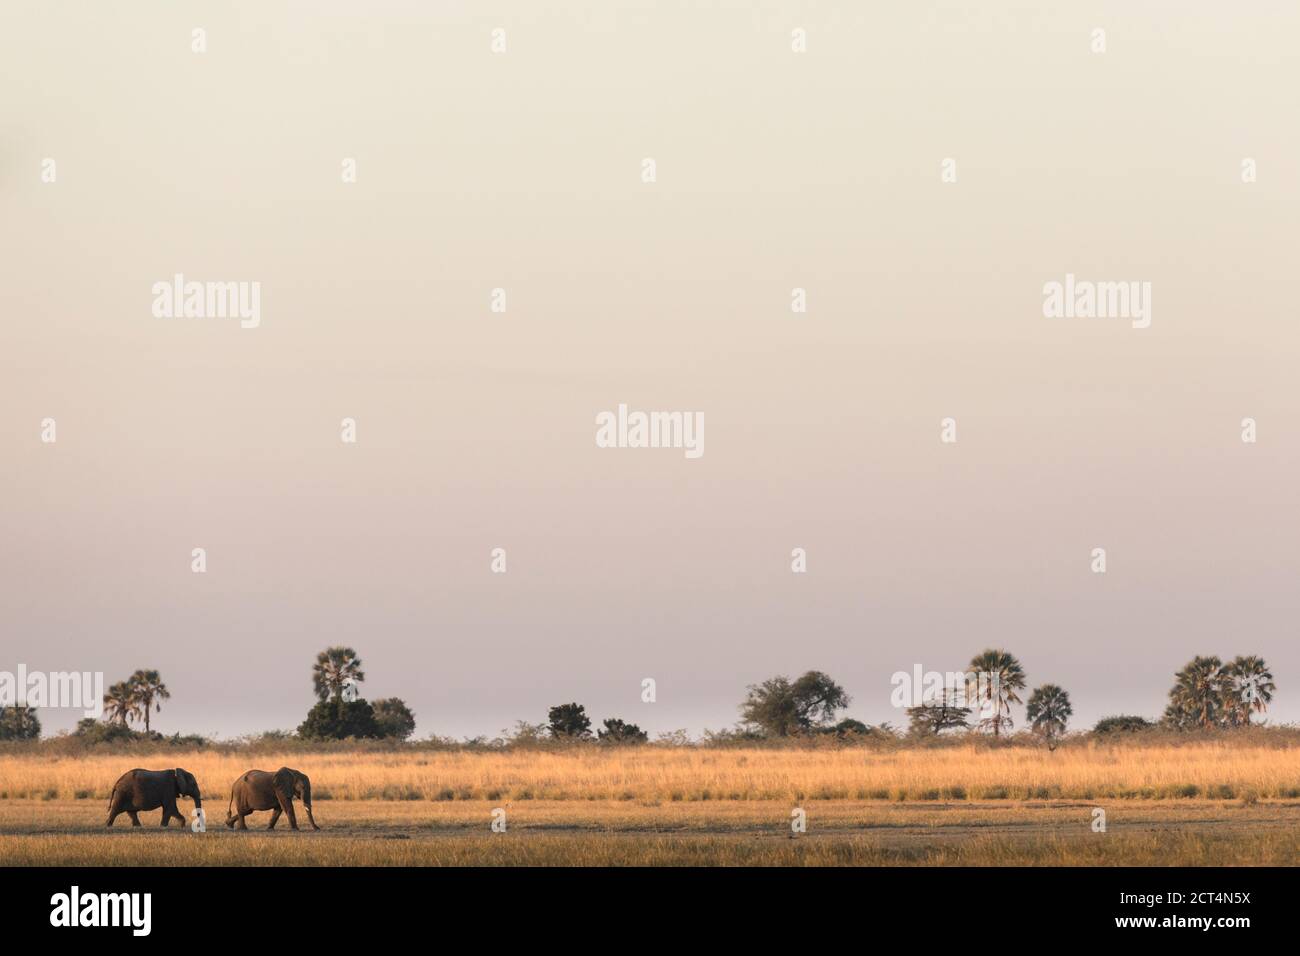 Elephants in the Okavango Delta. Stock Photo